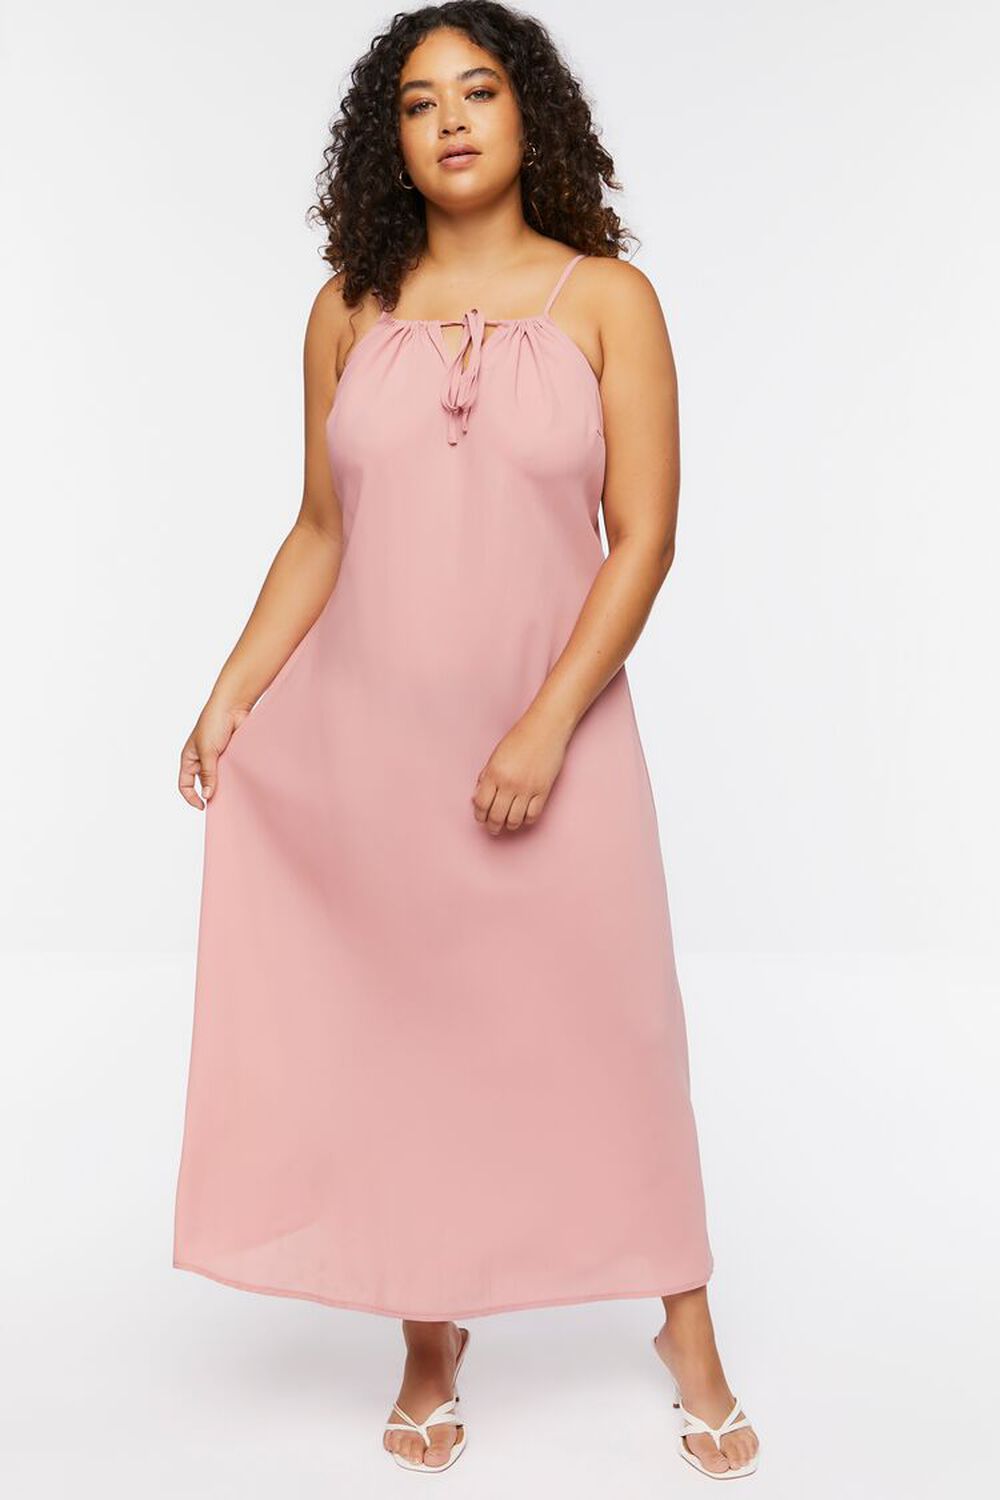 ROSE Plus Size Cami Maxi Dress, image 1